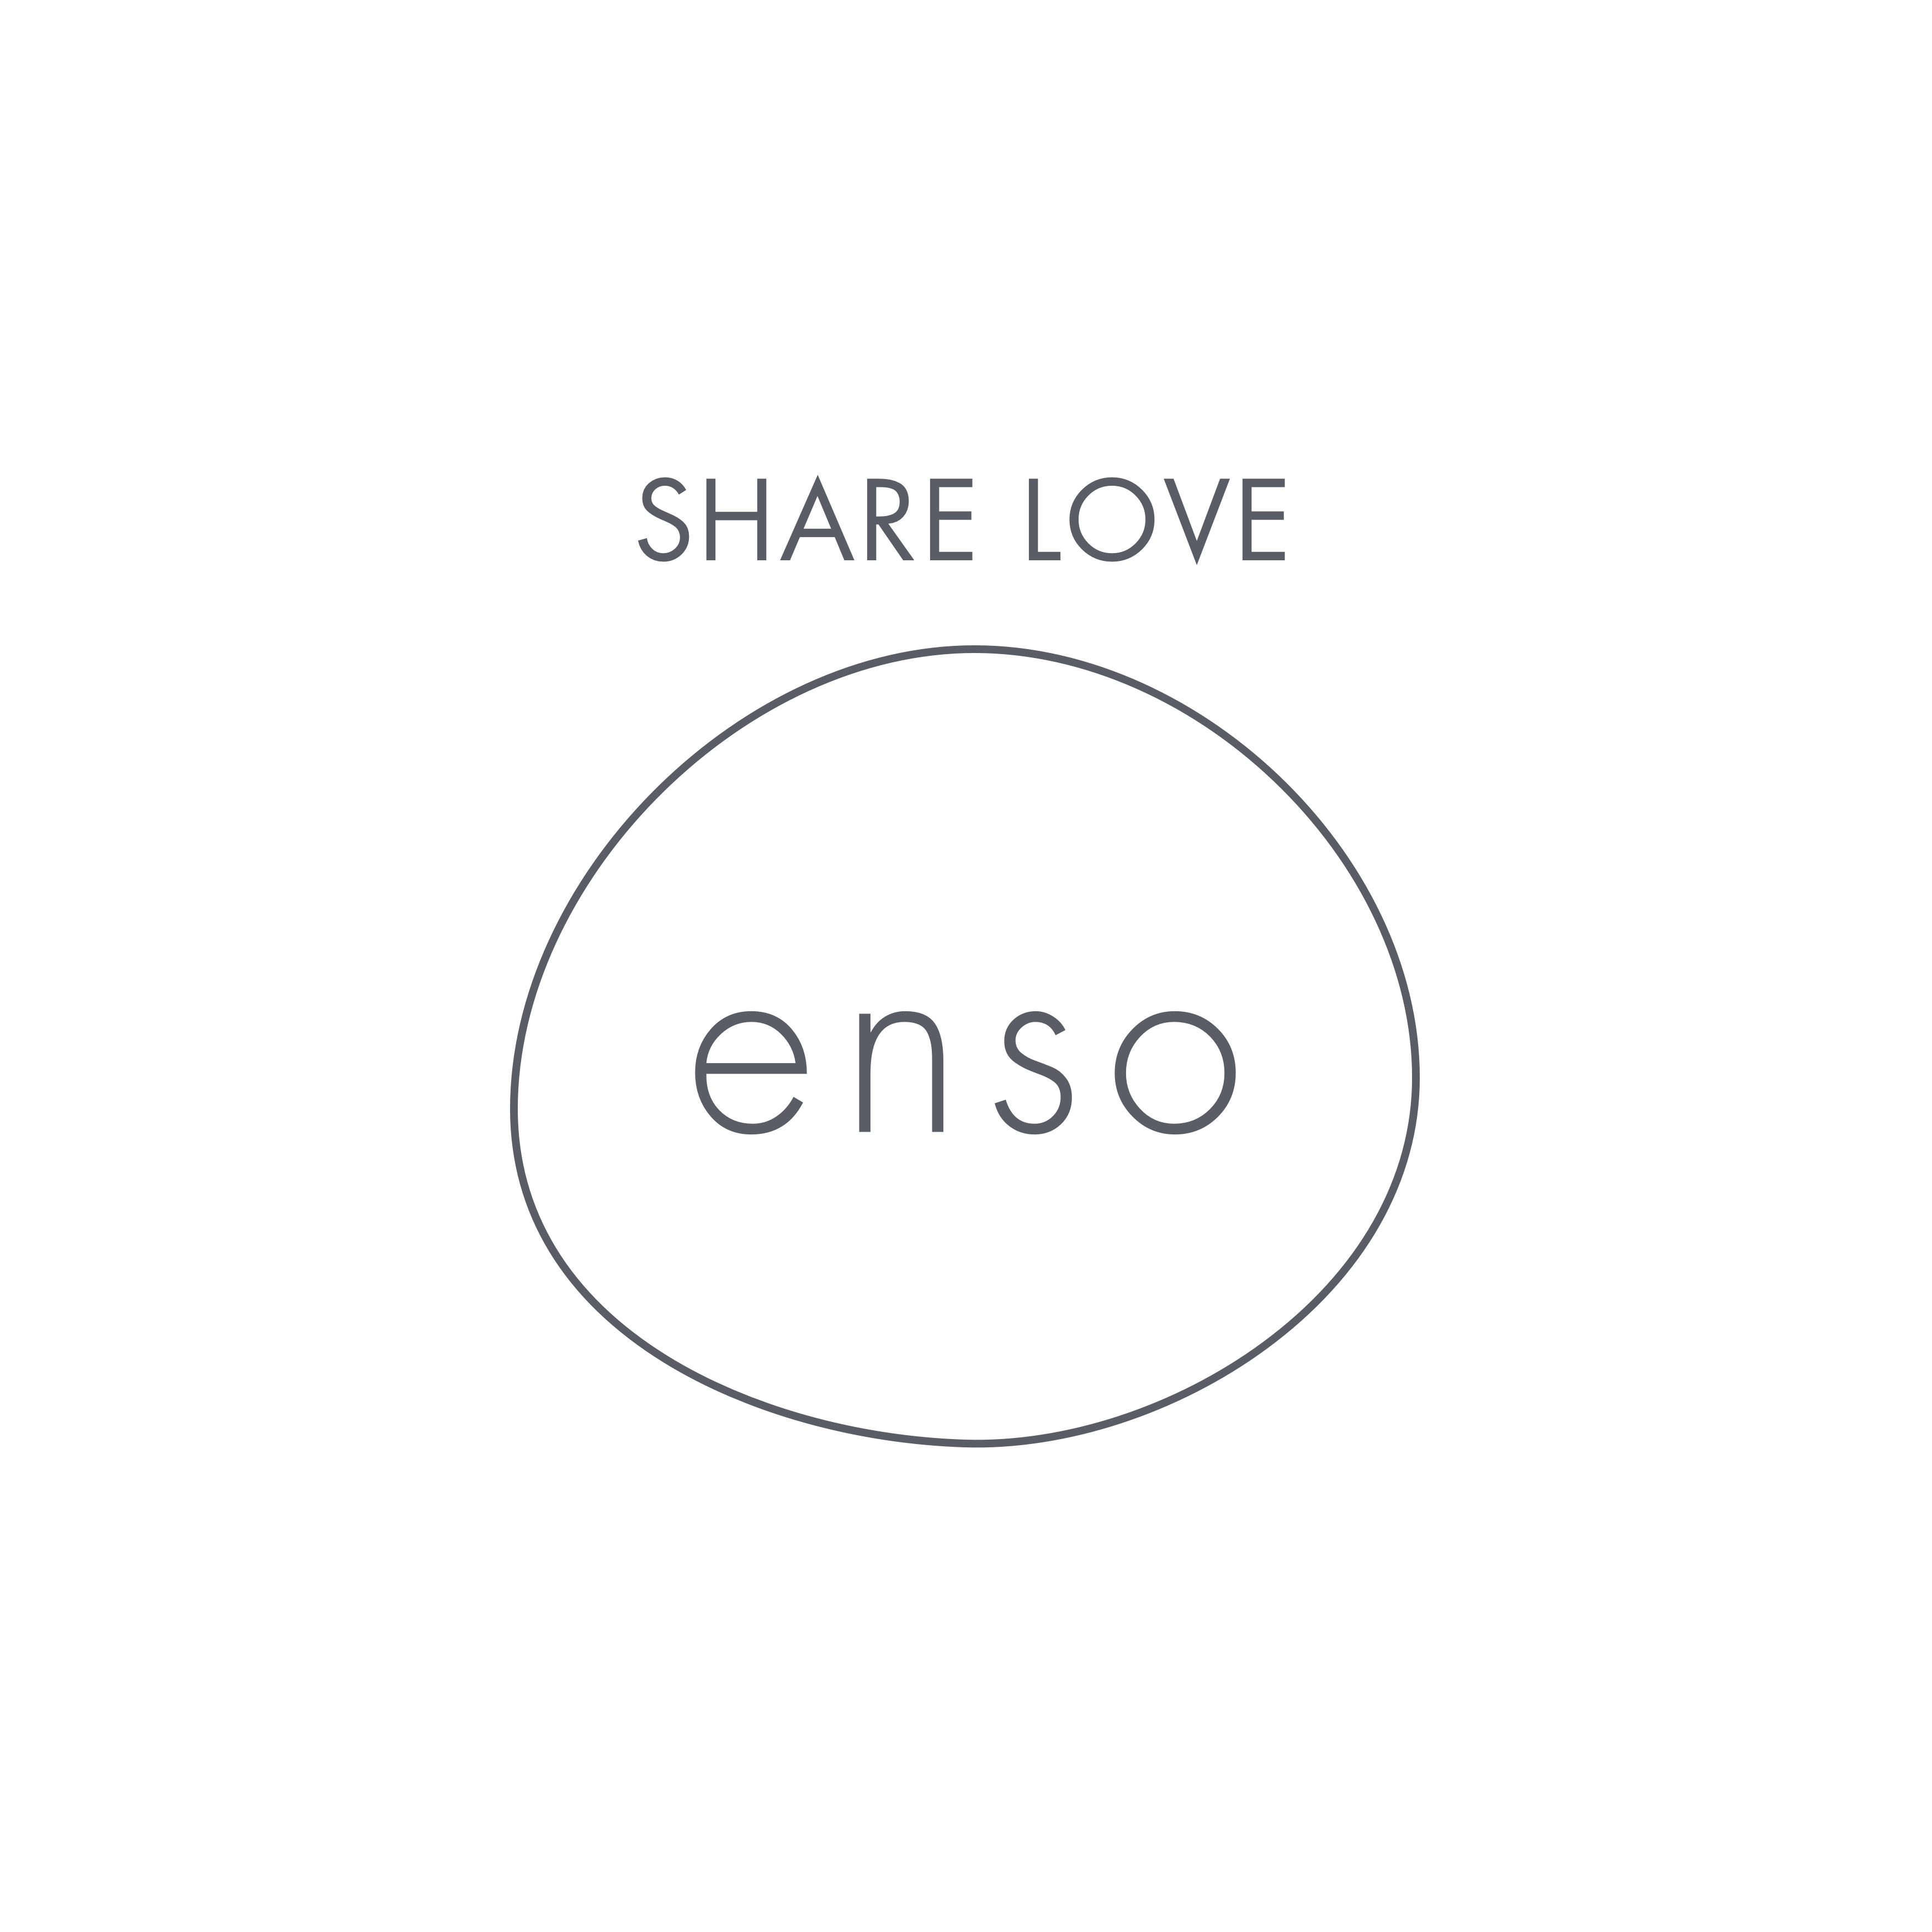 Enso Logo